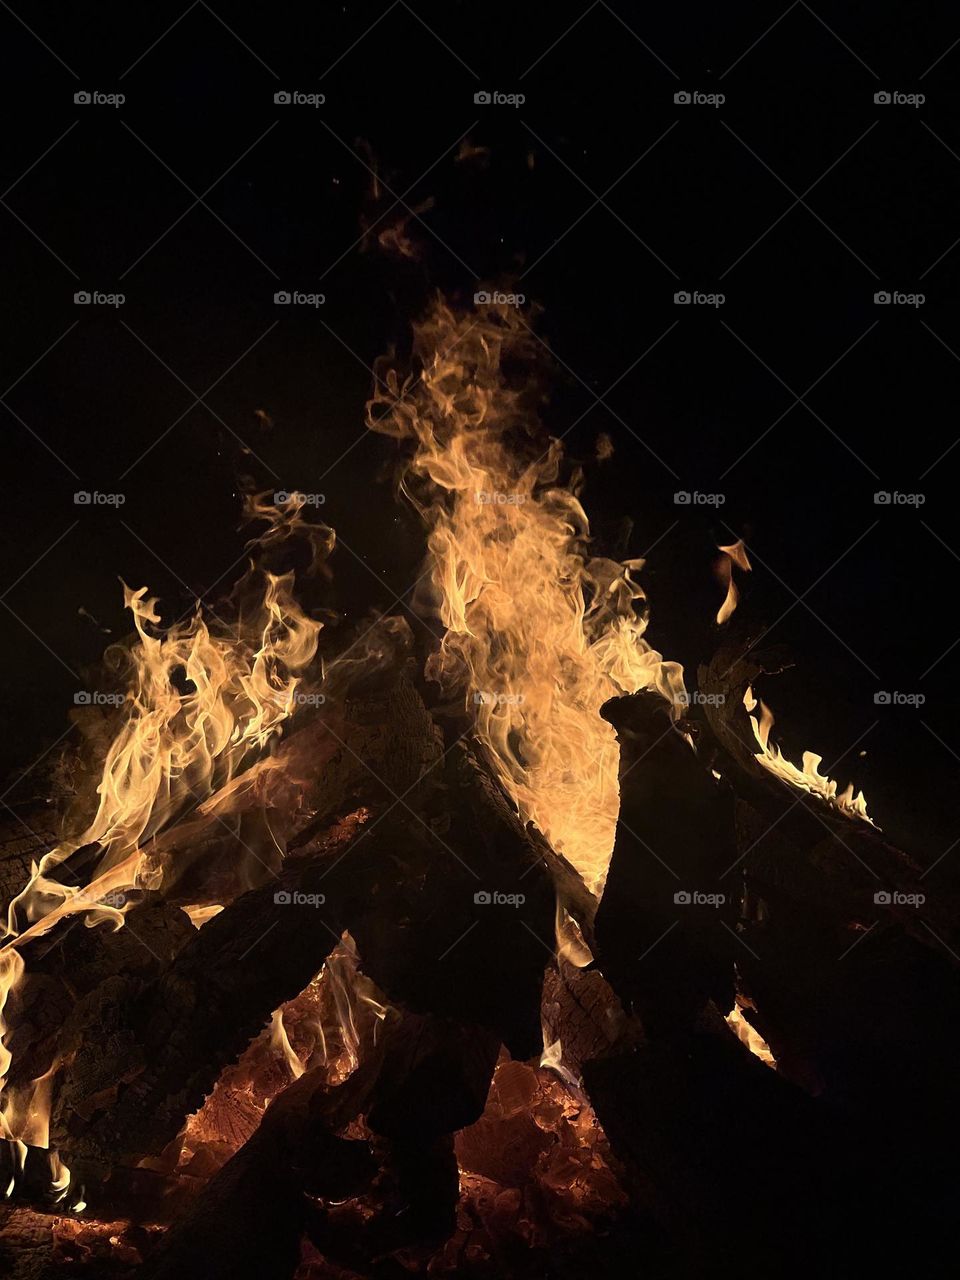 Summer season calls for endless stories around the bonfire